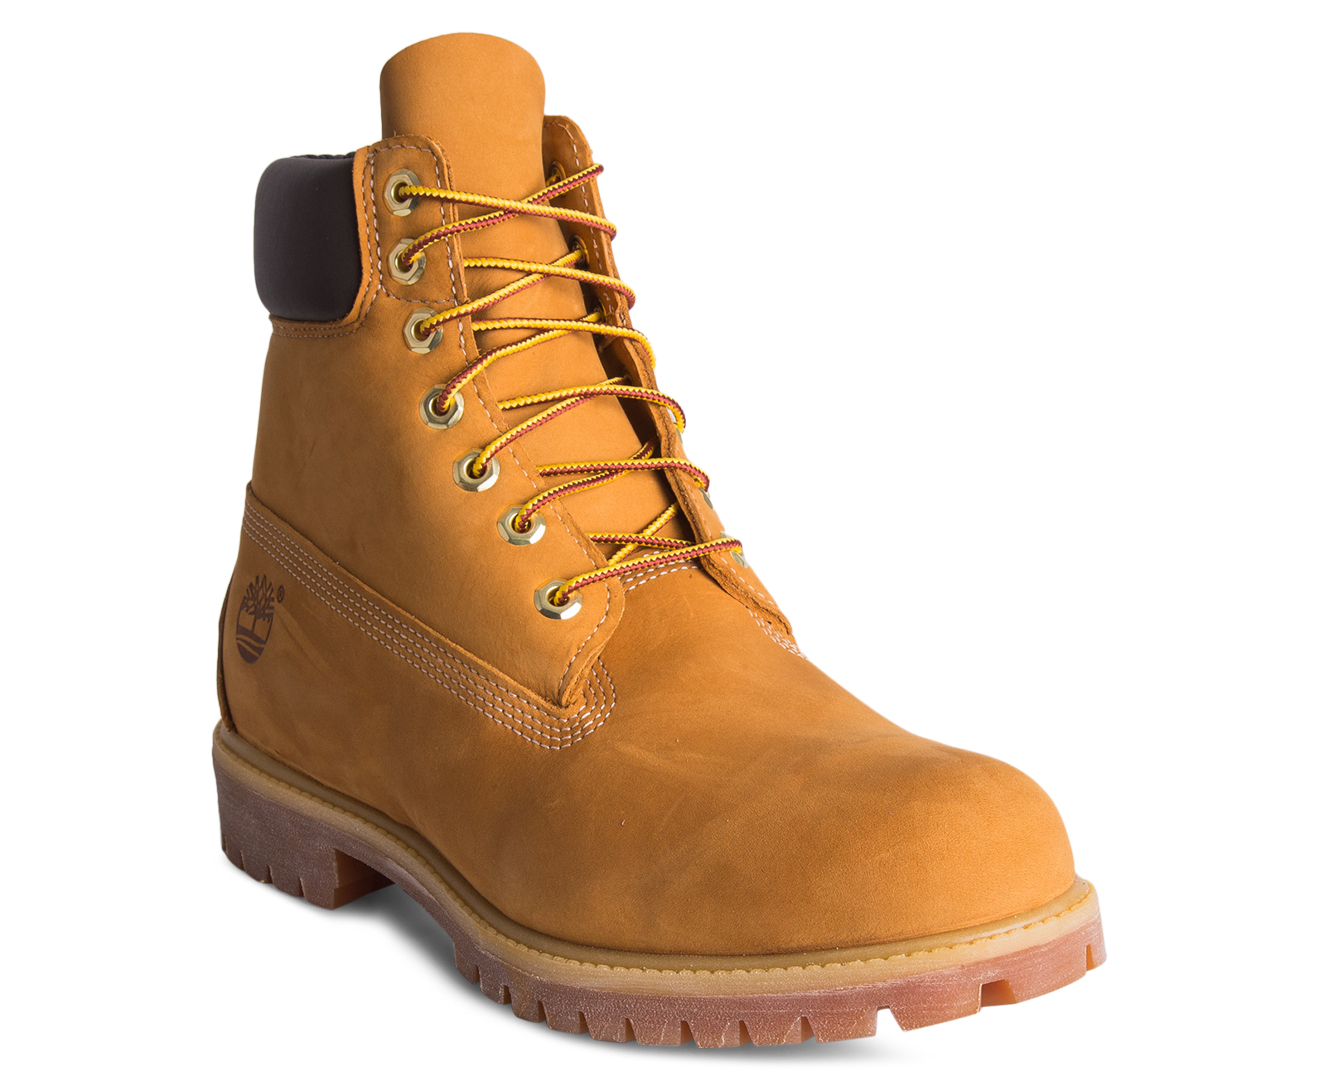 Timberland Men's 6 Inch Premium Boots - Wheat | Catch.co.nz